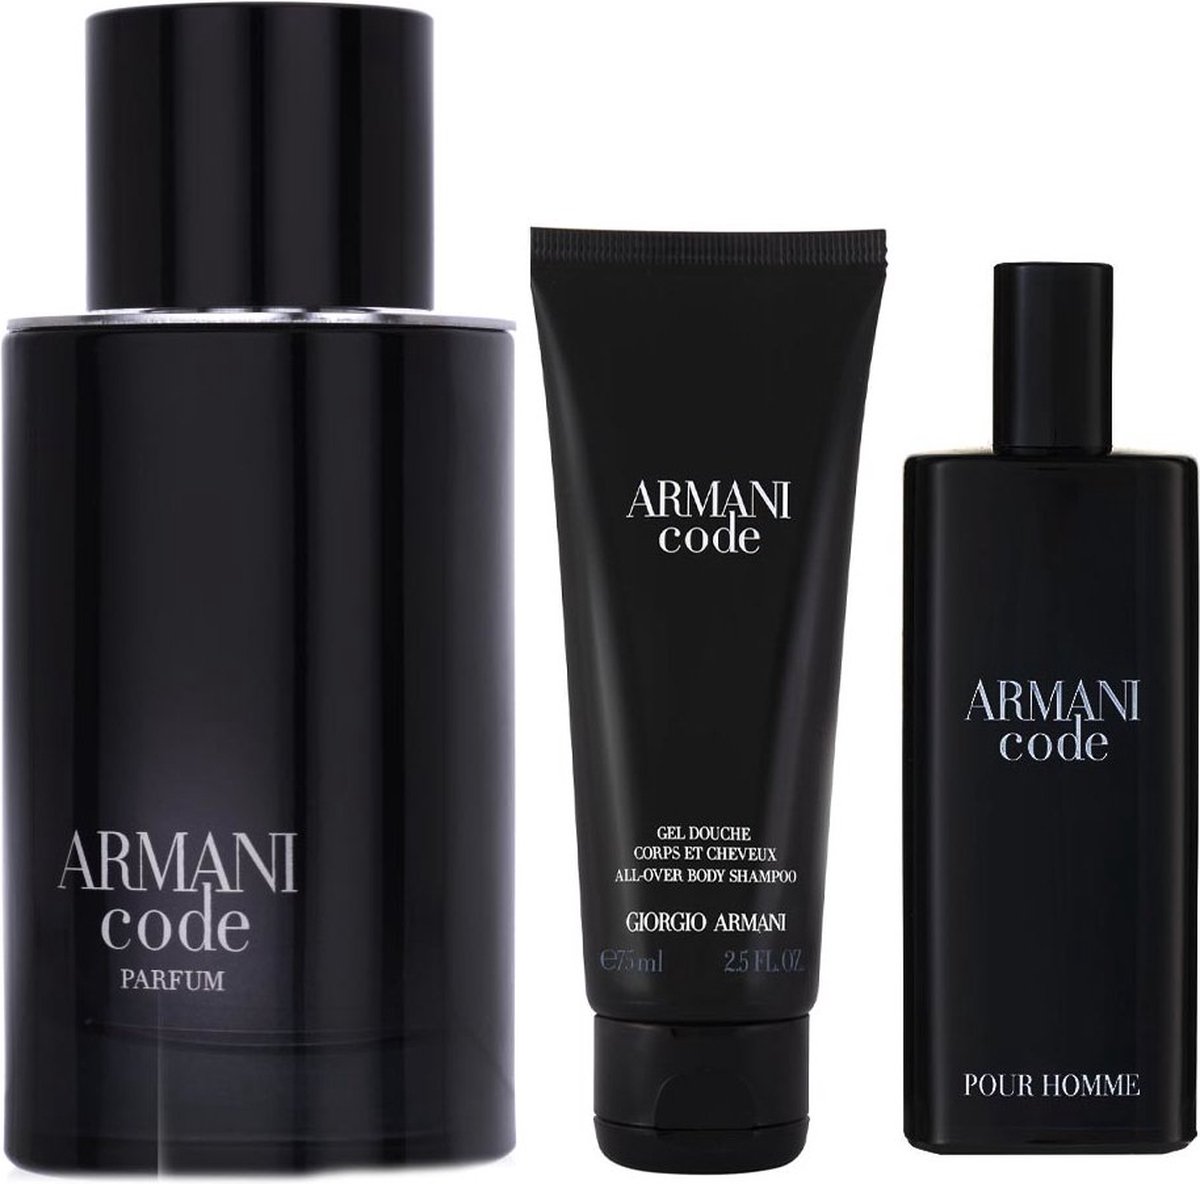 ARMANI ARMANI CODE LE PARFUM Parfum set mannen 3 stuks EDP 75 ml + EDP 15 ml + Douche Gel 75 ml